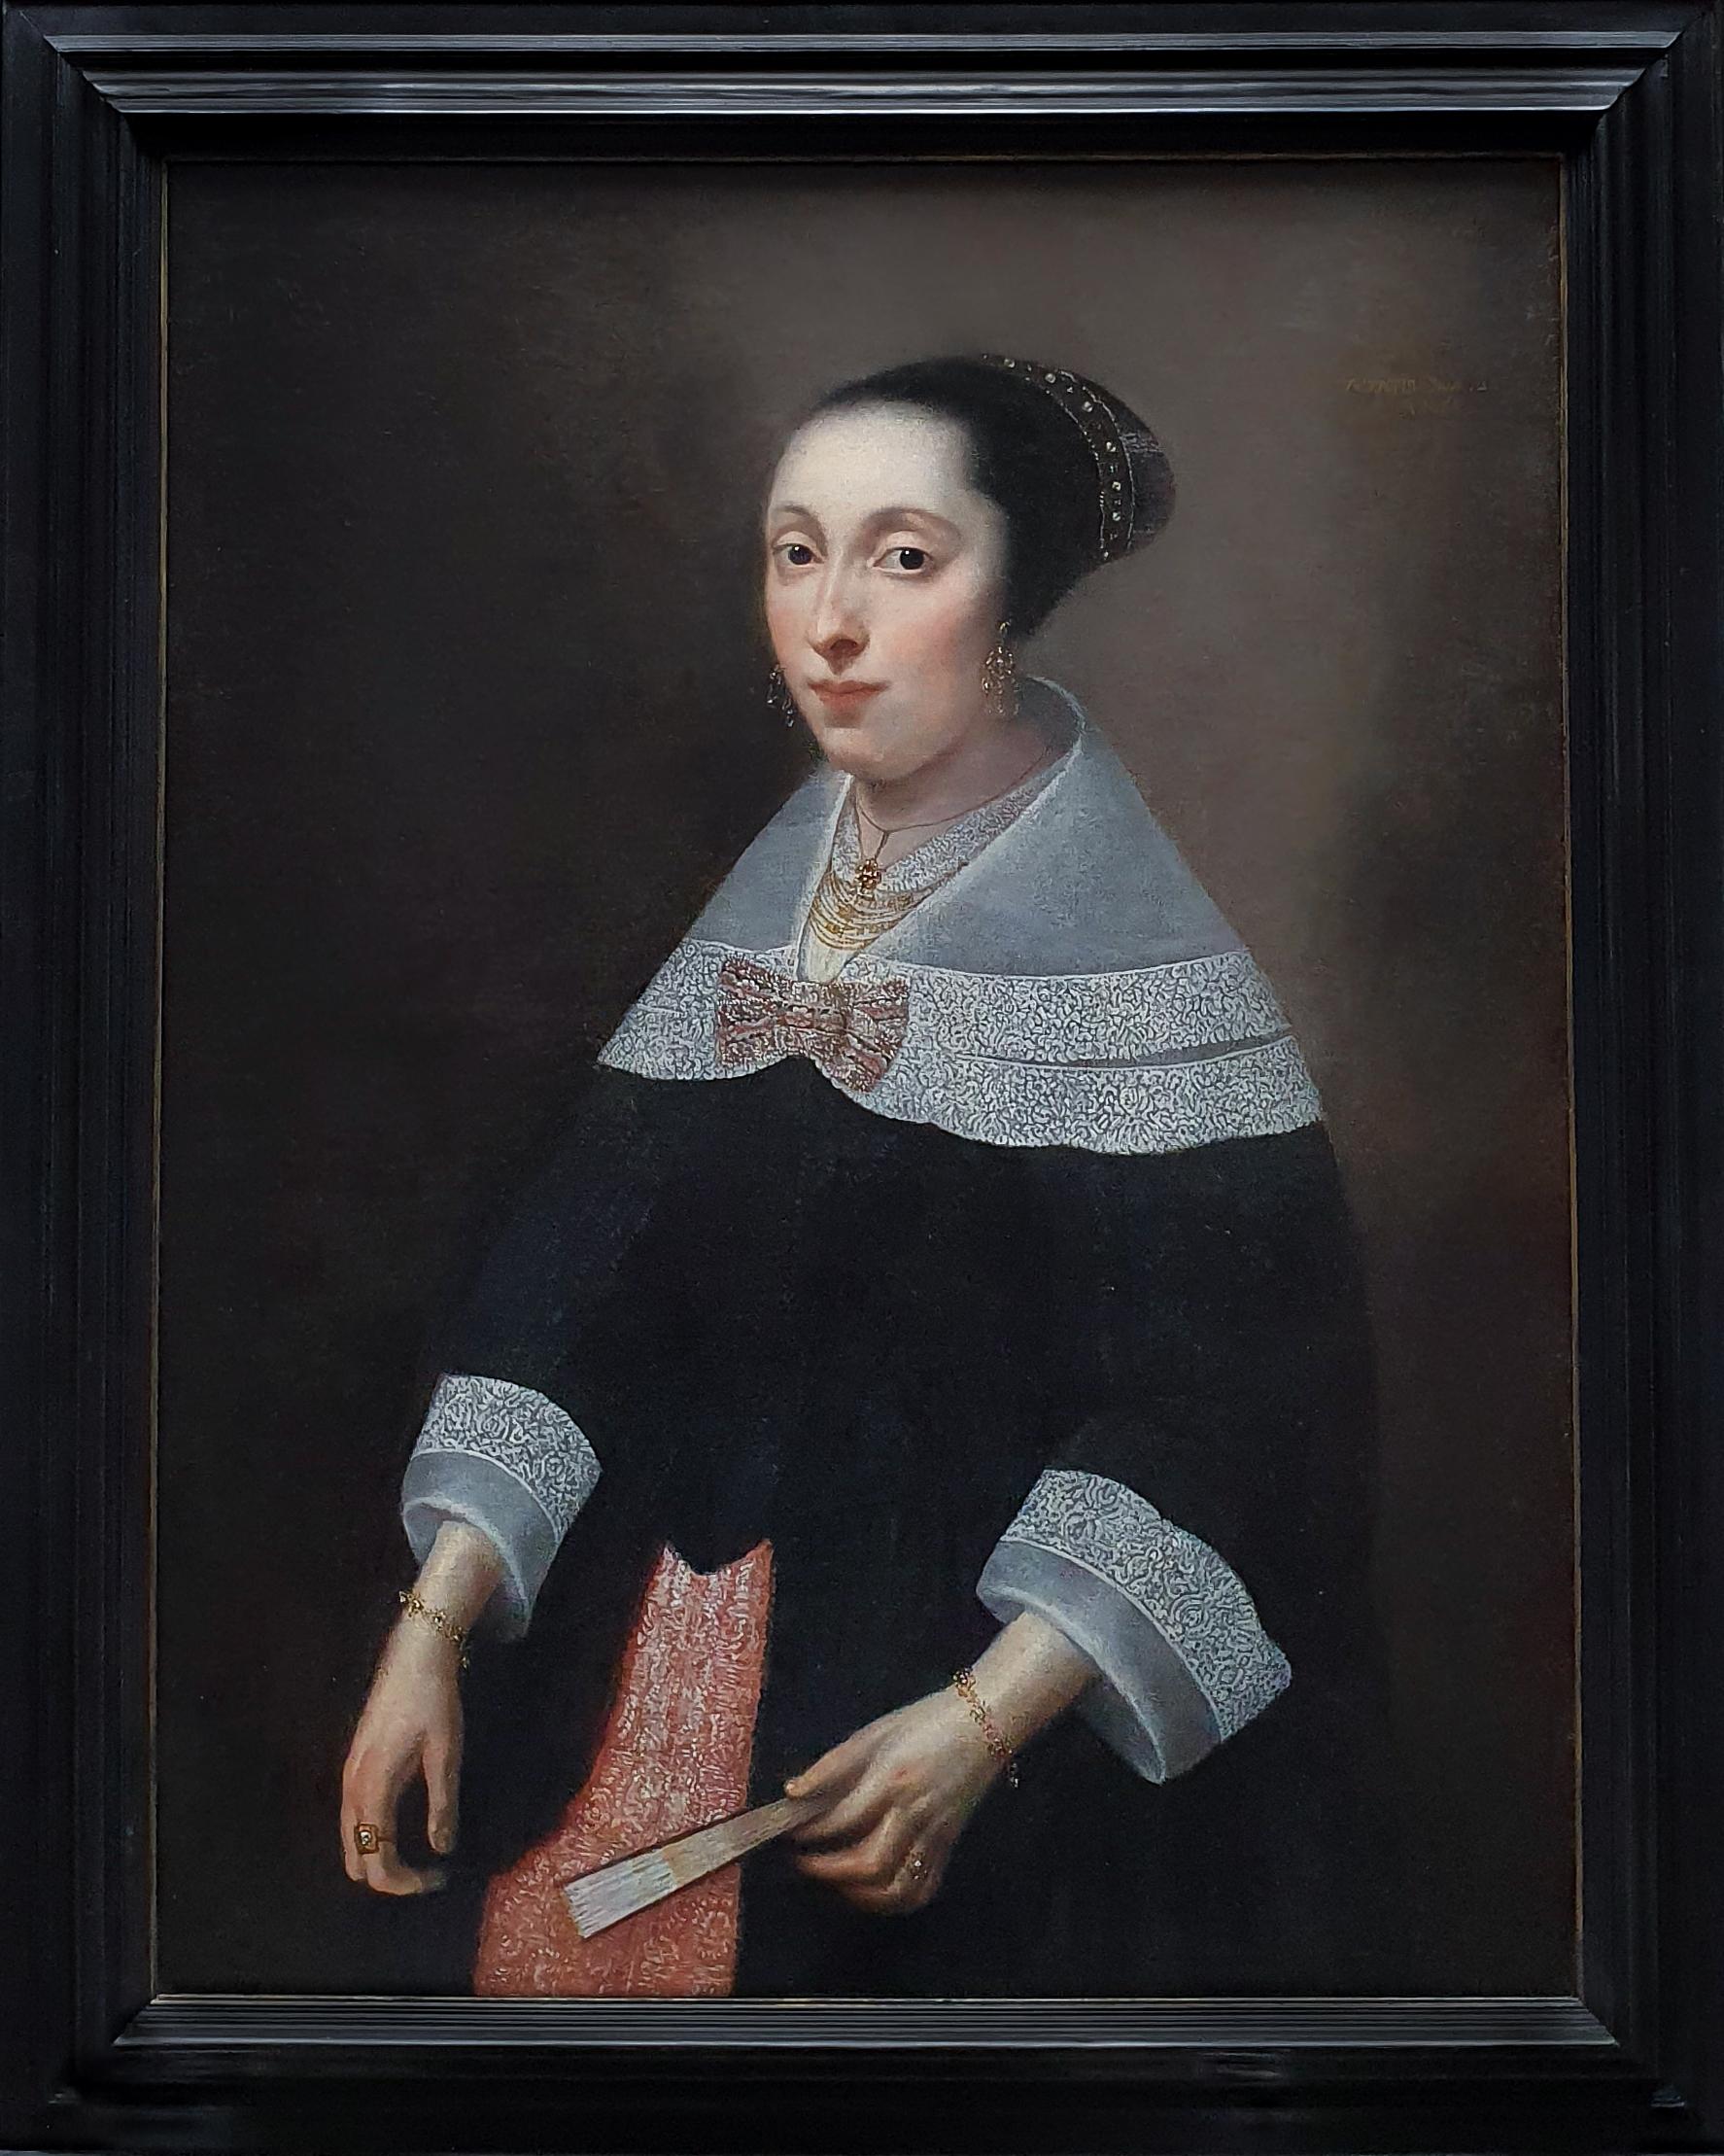 (Circle of) Willem Drost Portrait Painting - Portrait of a Lady Holding a Fan c.1656, Dutch Antique Oil Painting